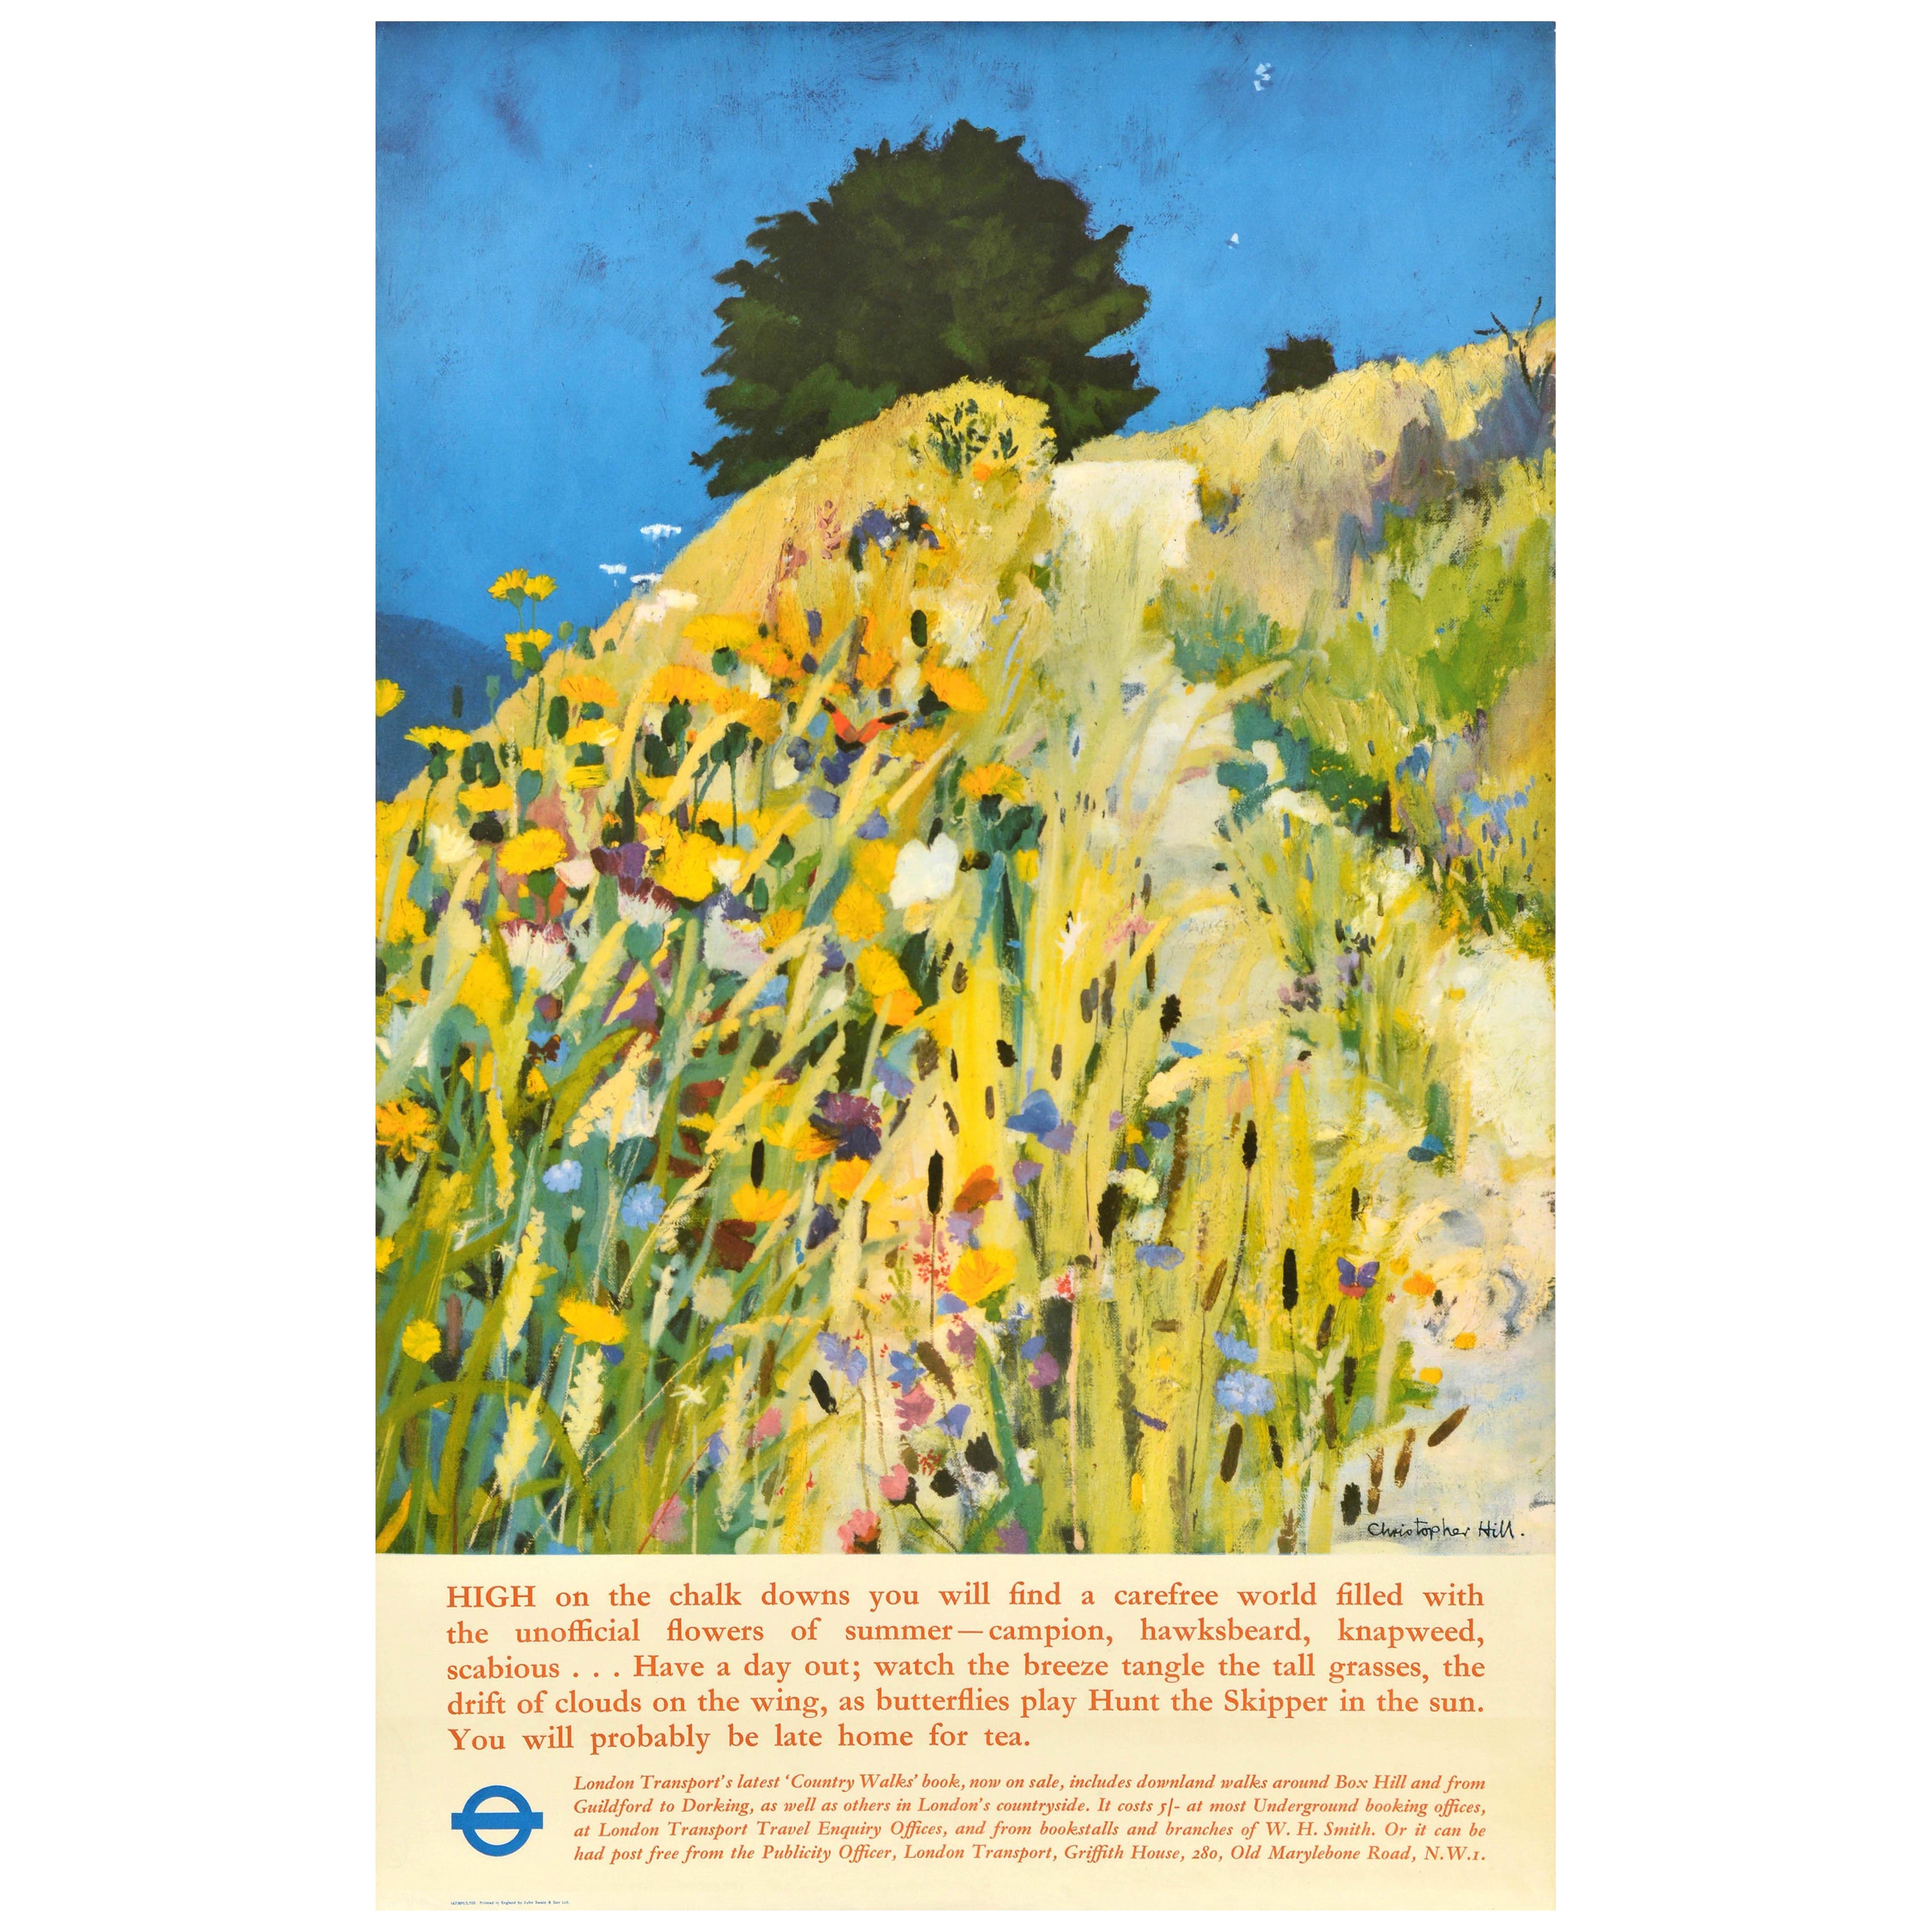 Original Vintage Travel Poster Downland Walks London Transport Country Walks UK